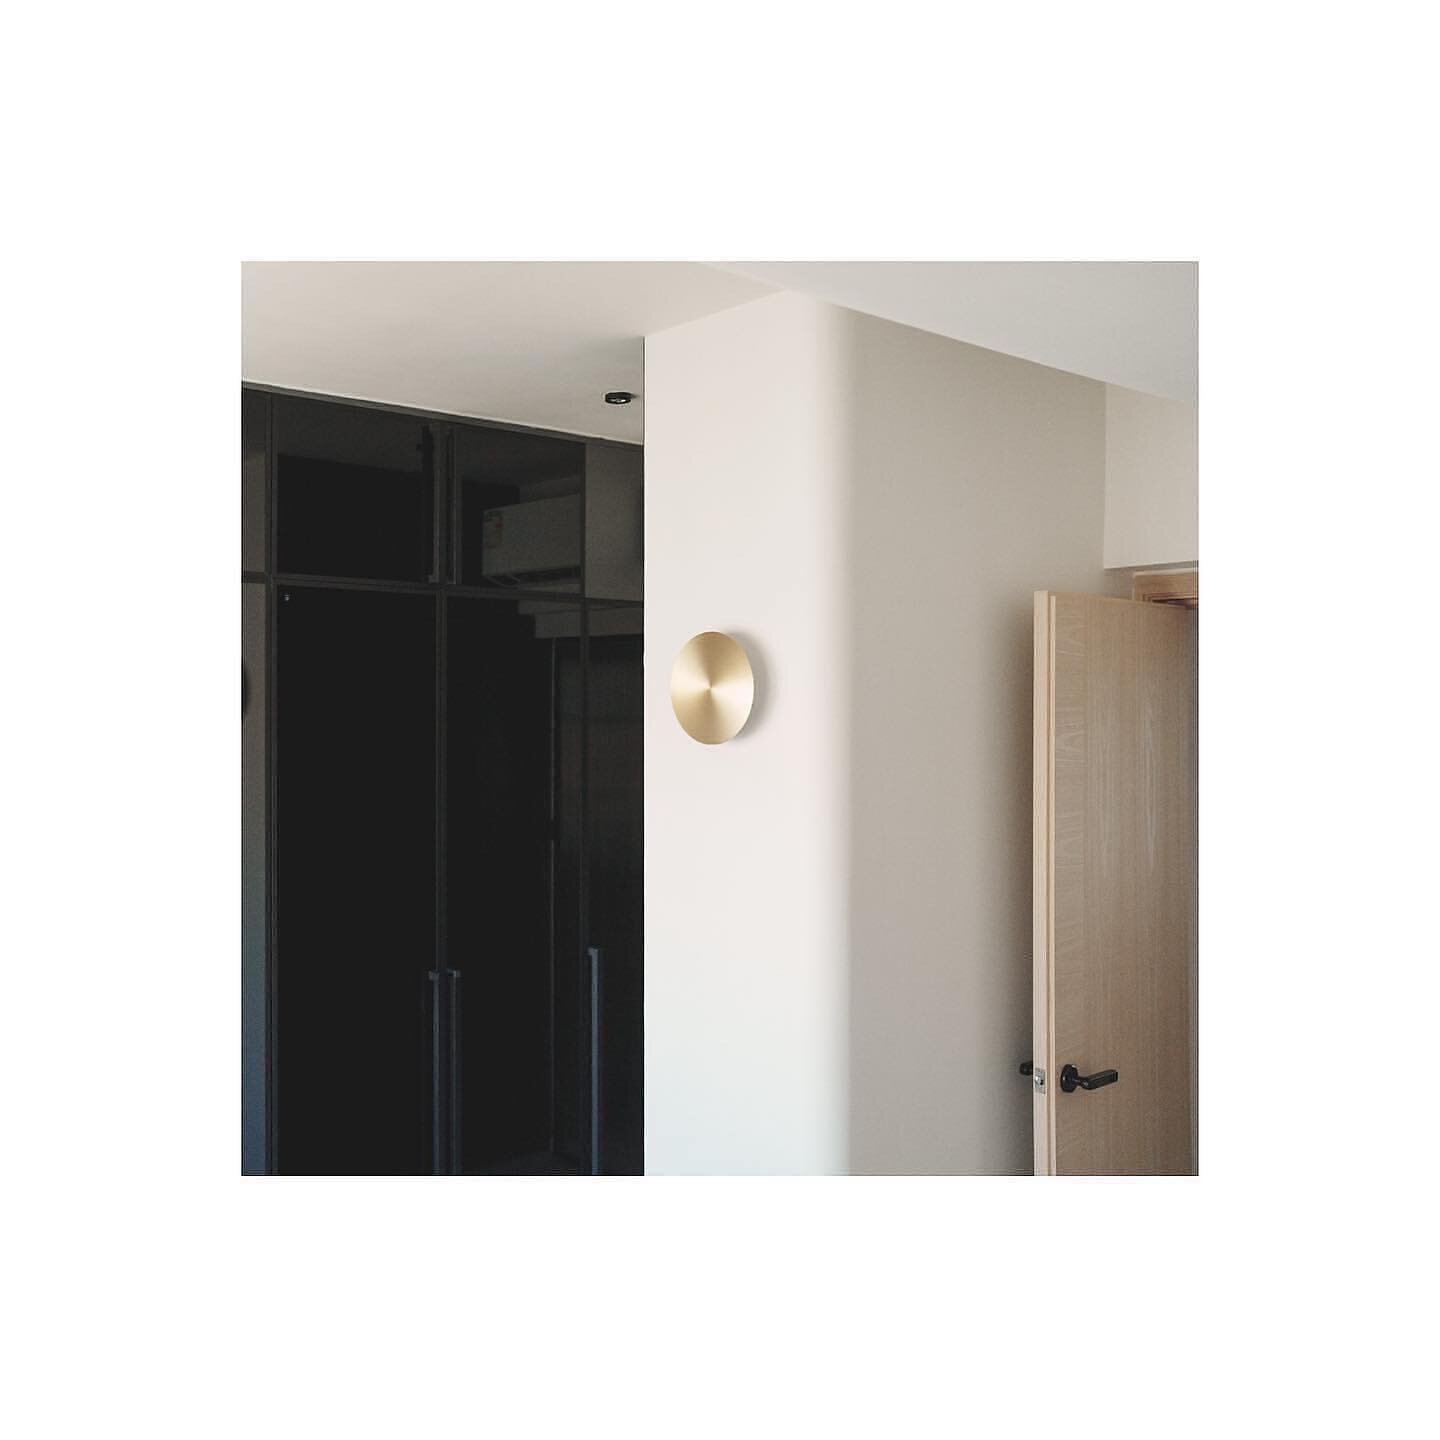 Bedroom atmosphere 

Photography
@grasstso @123cheese_production 

#design #interiordesigner #residentialdesign #residential #naturallight #hongkonginteriordesigner #interior #atmosphere #sunlight #apartment #ziu_i.a #home #interiors #decor #interior